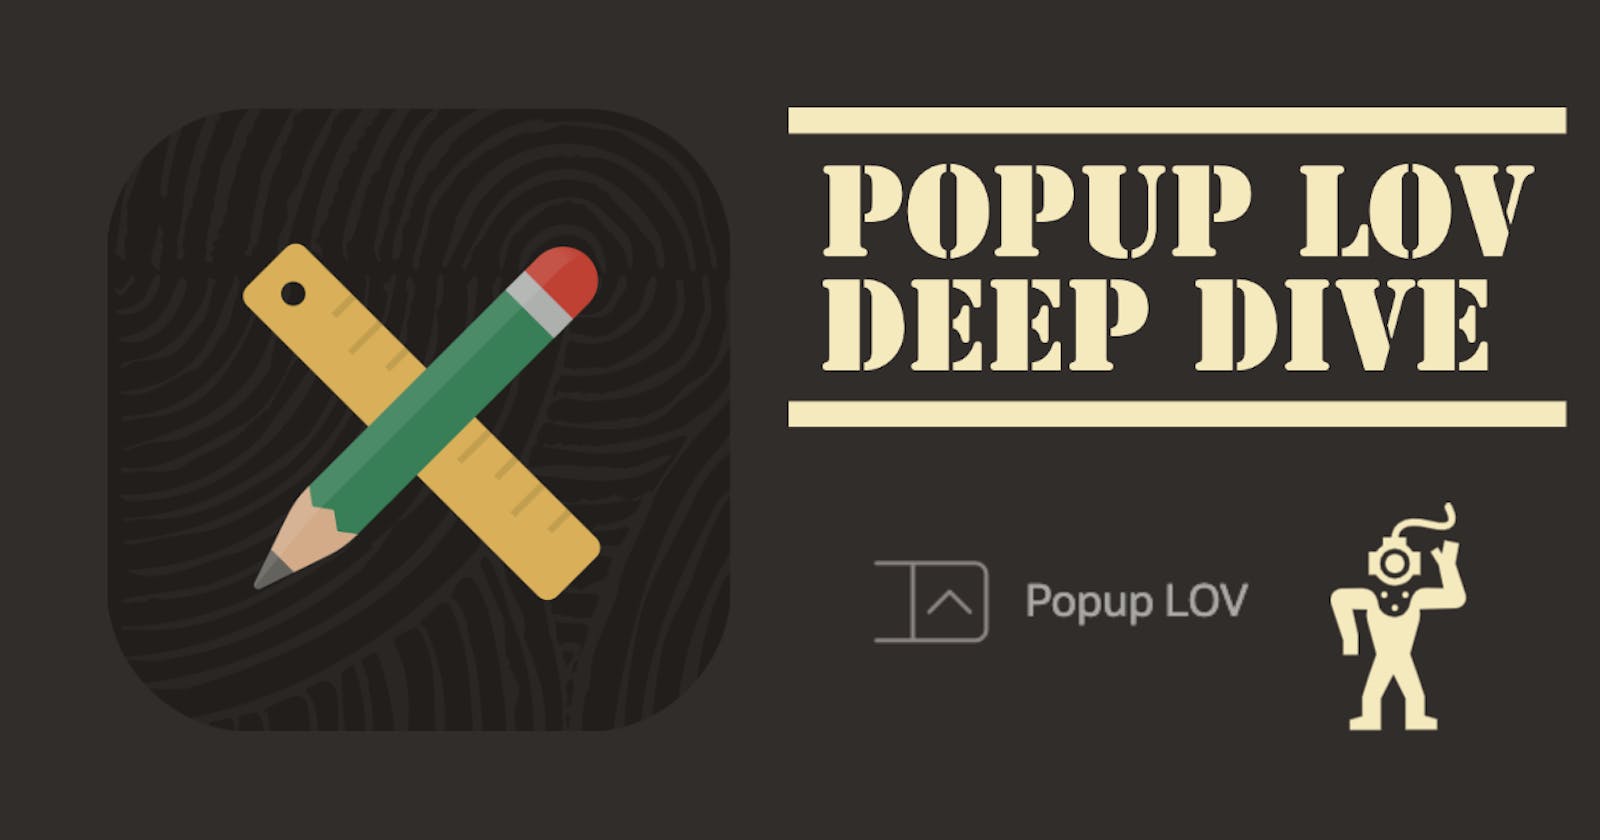 APEX Popup LOV Deep Dive